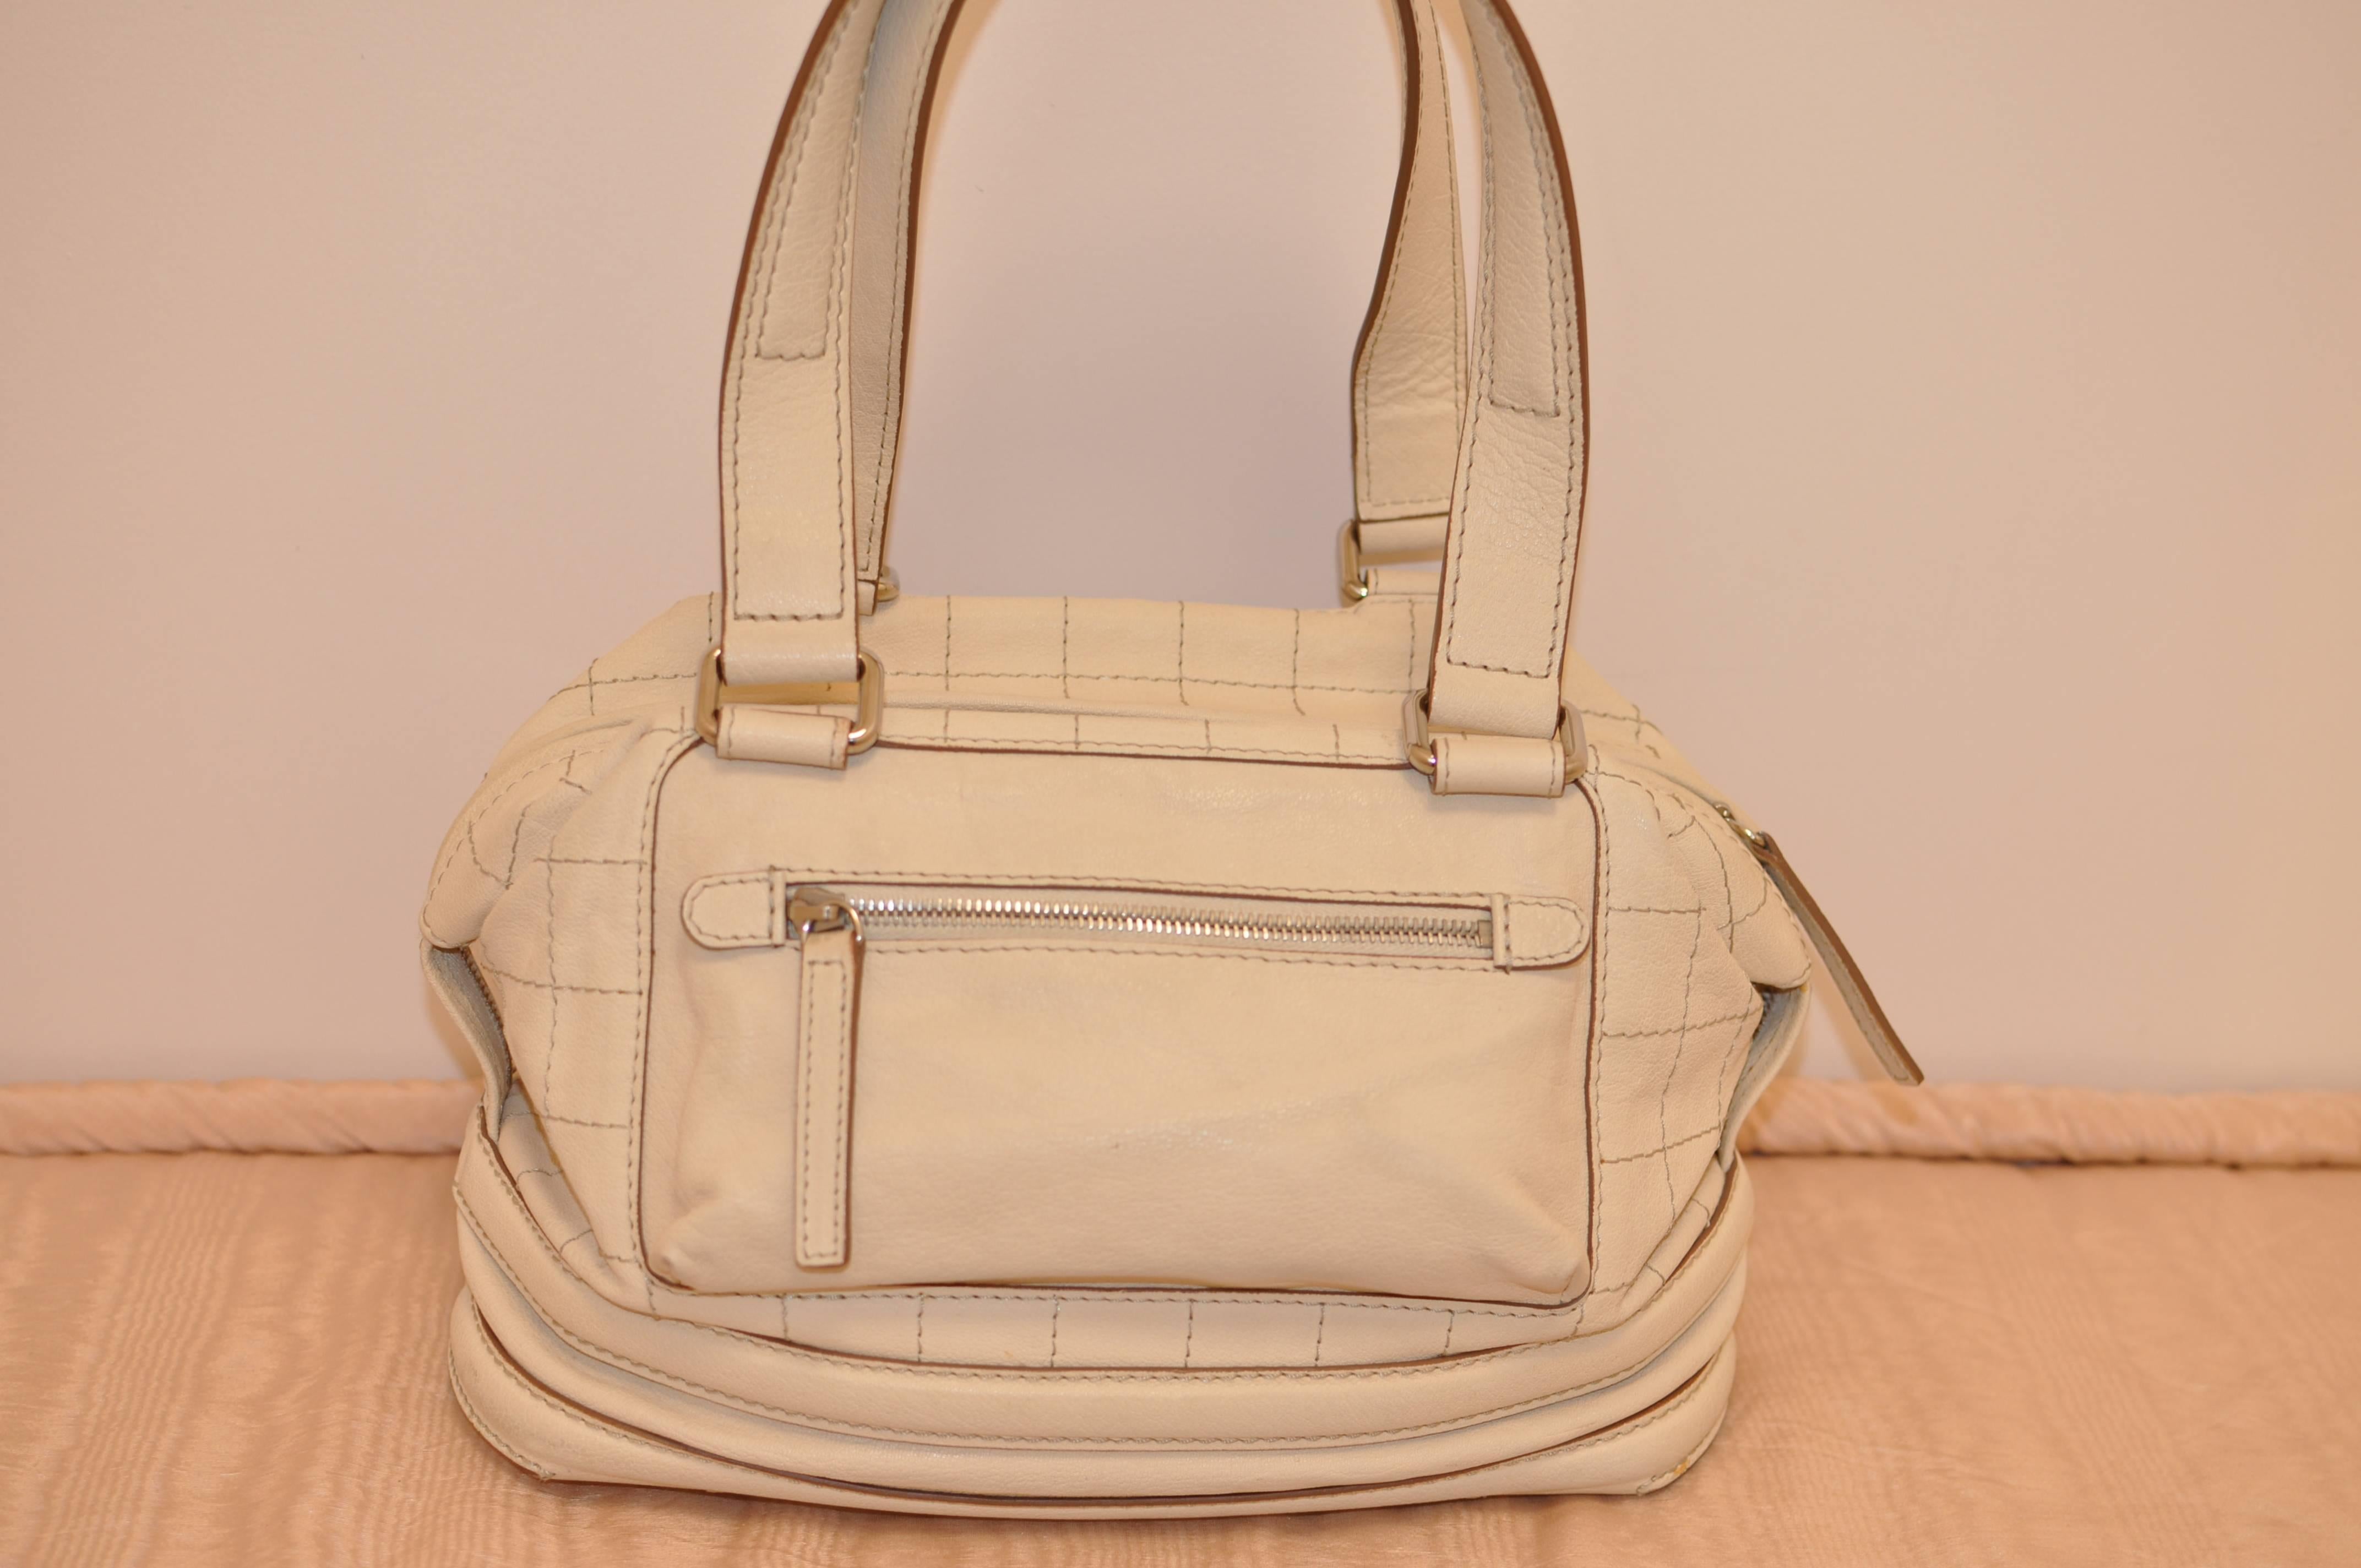 Chanel Essential Bowler Bag, 2006 - 2008 serial#11218711 w/dust bag 2